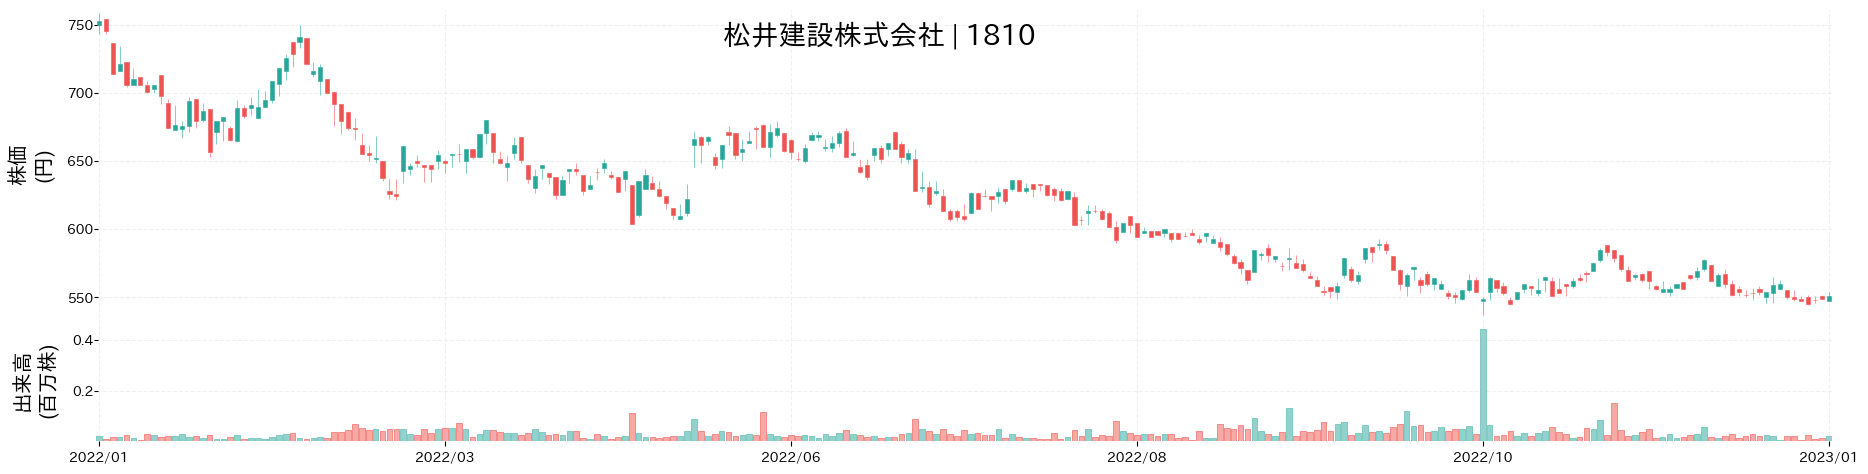 松井建設の株価推移(2022)